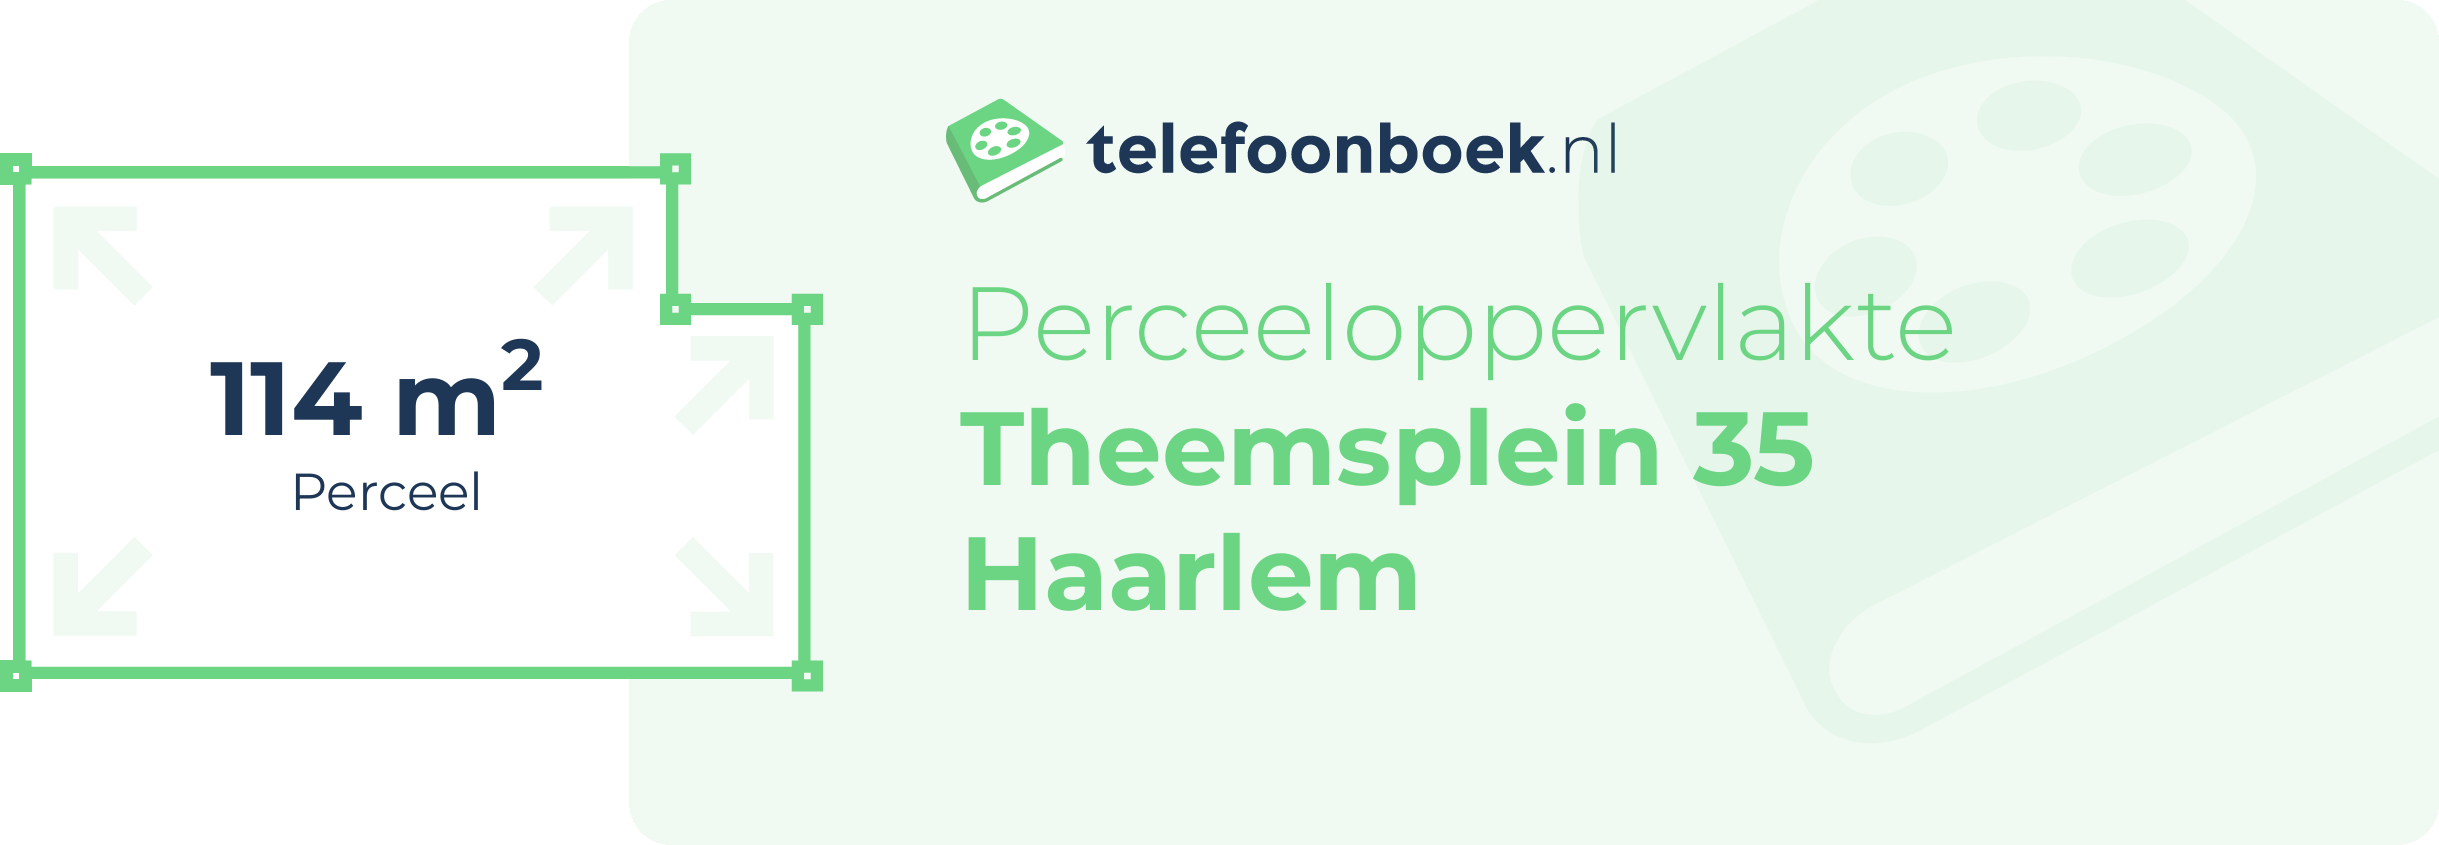 Perceeloppervlakte Theemsplein 35 Haarlem